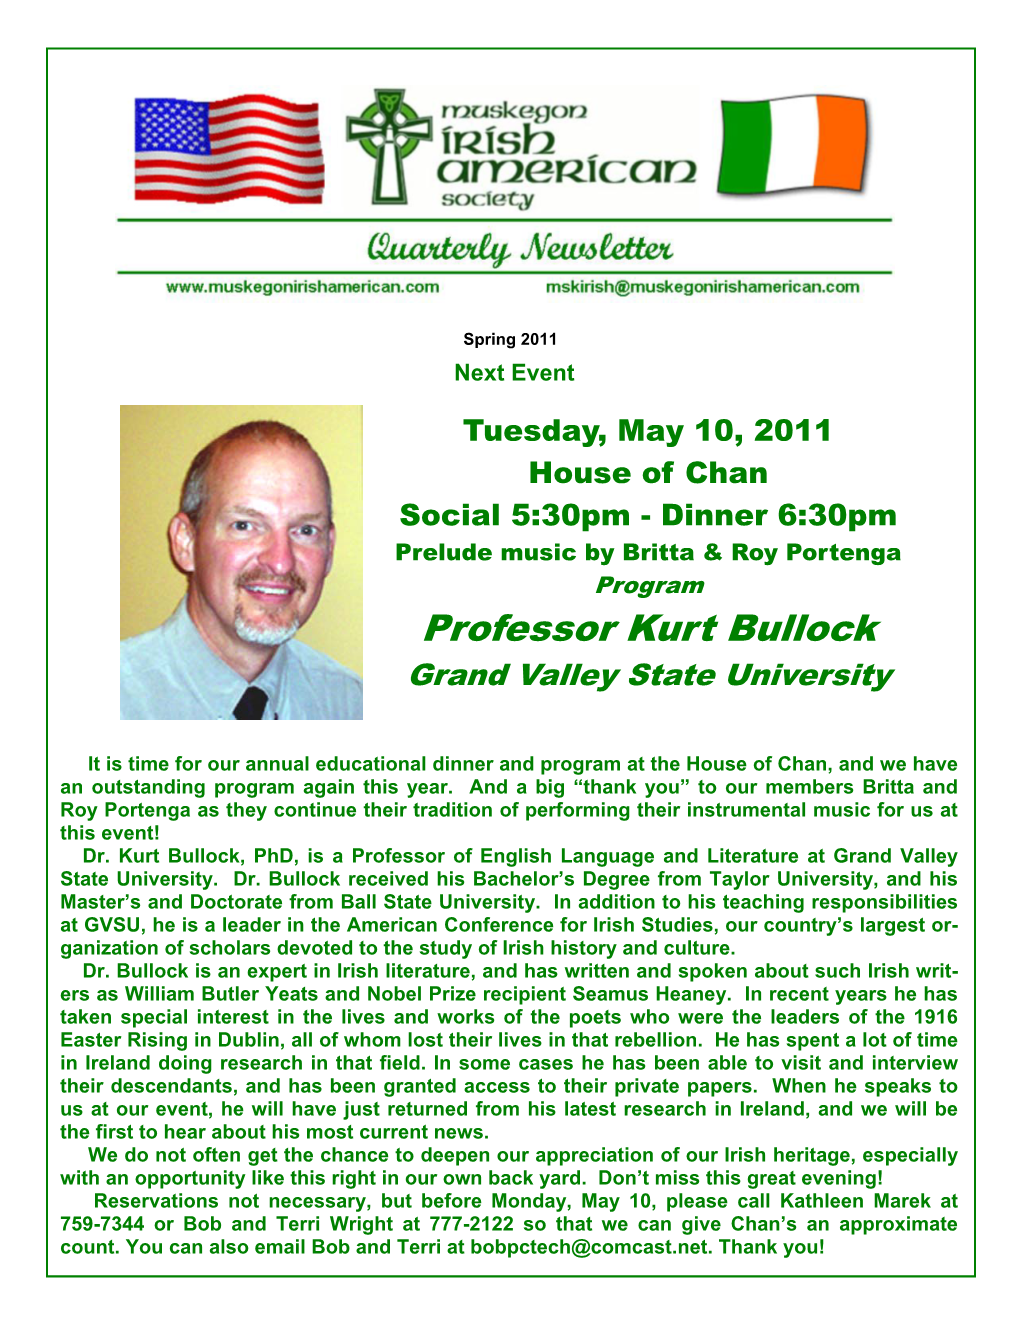 Professor Kurt Bullock Grand Valley State University